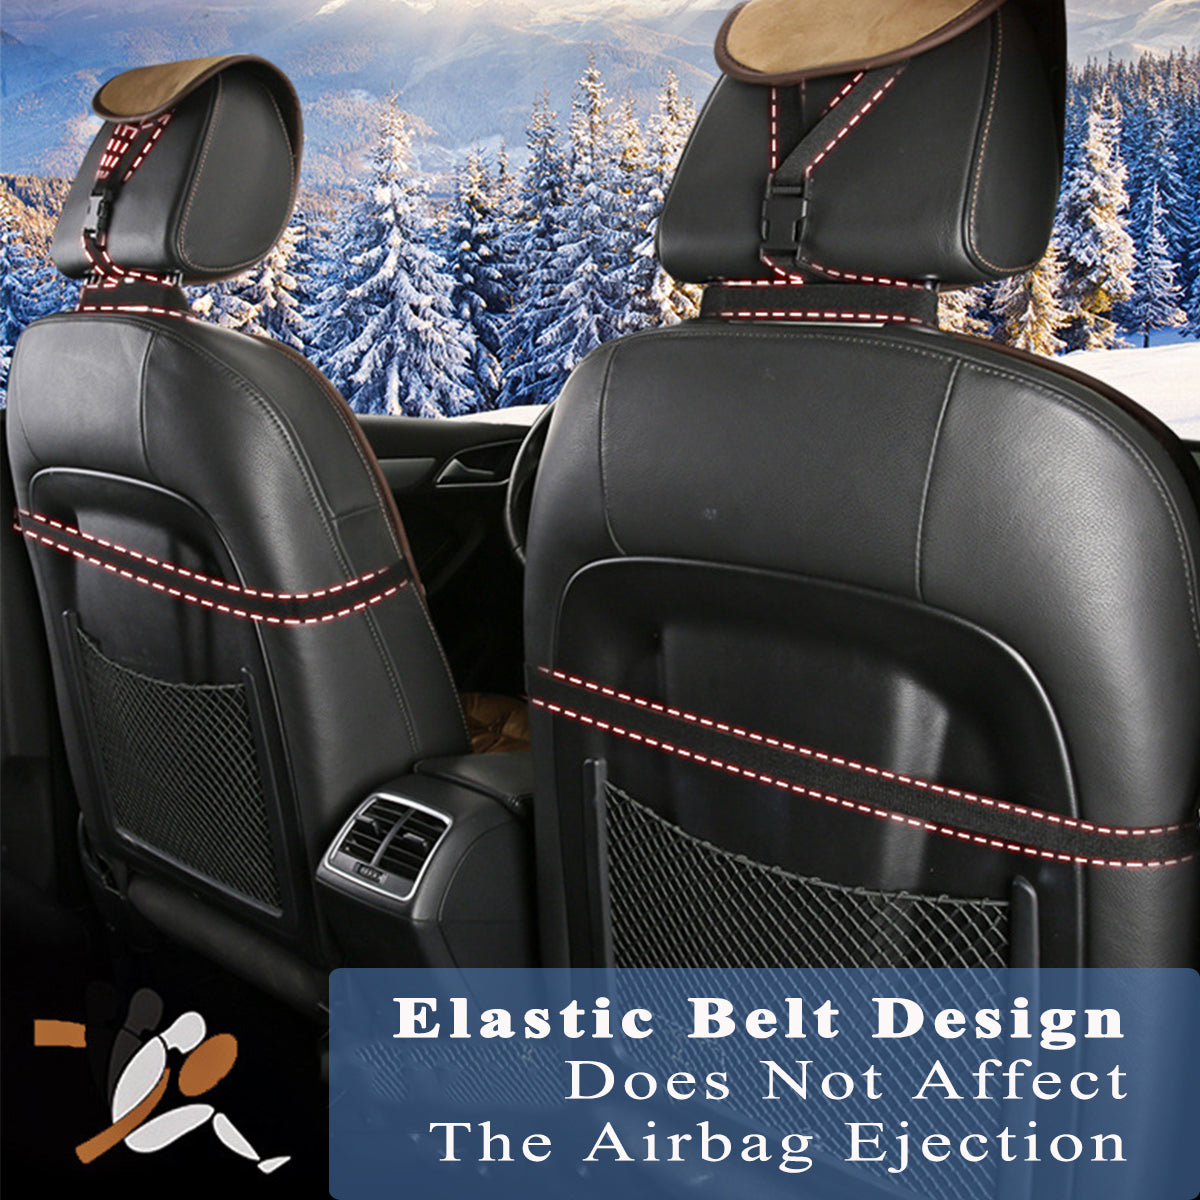 Car Warm Seat Cushion Winter Plush Comfortable Universal Protection Pad 1 Pcs